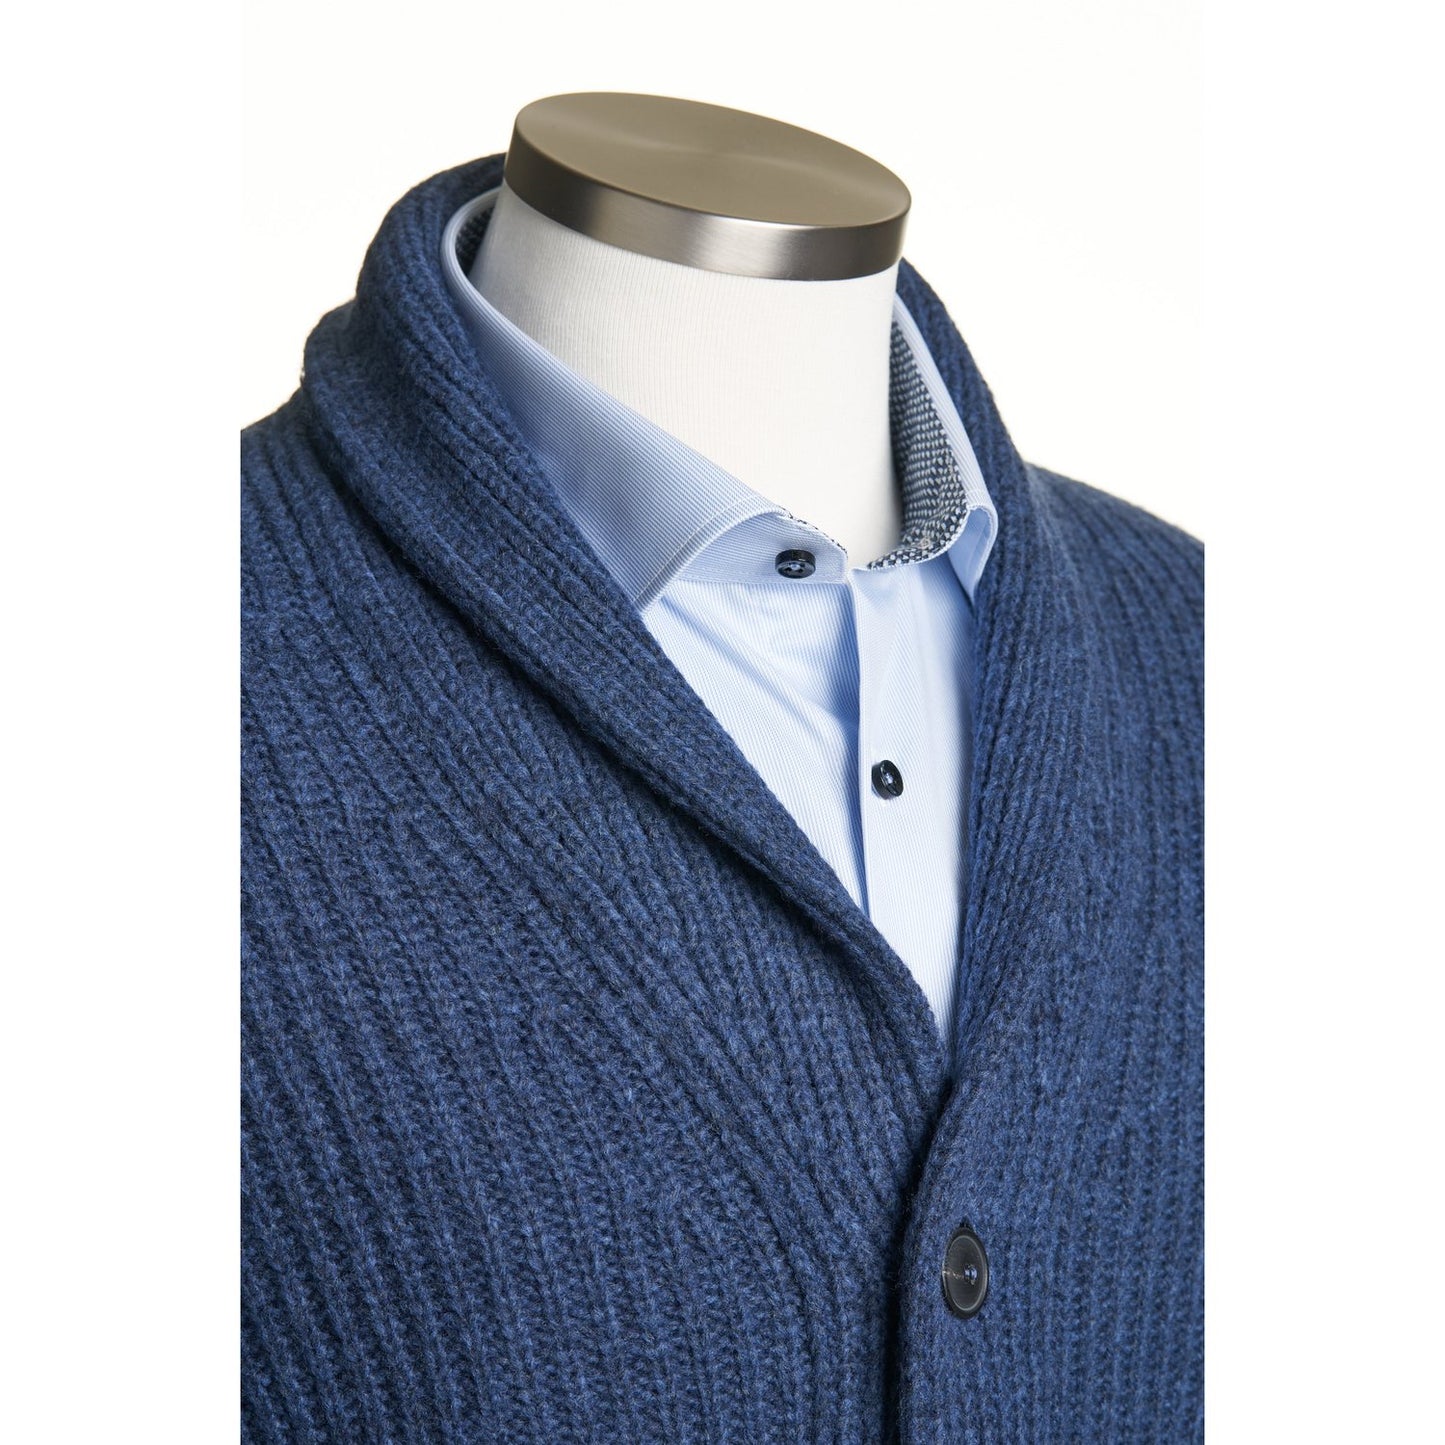 Gran Sasso Wool Ribbed Cardigan in Blue